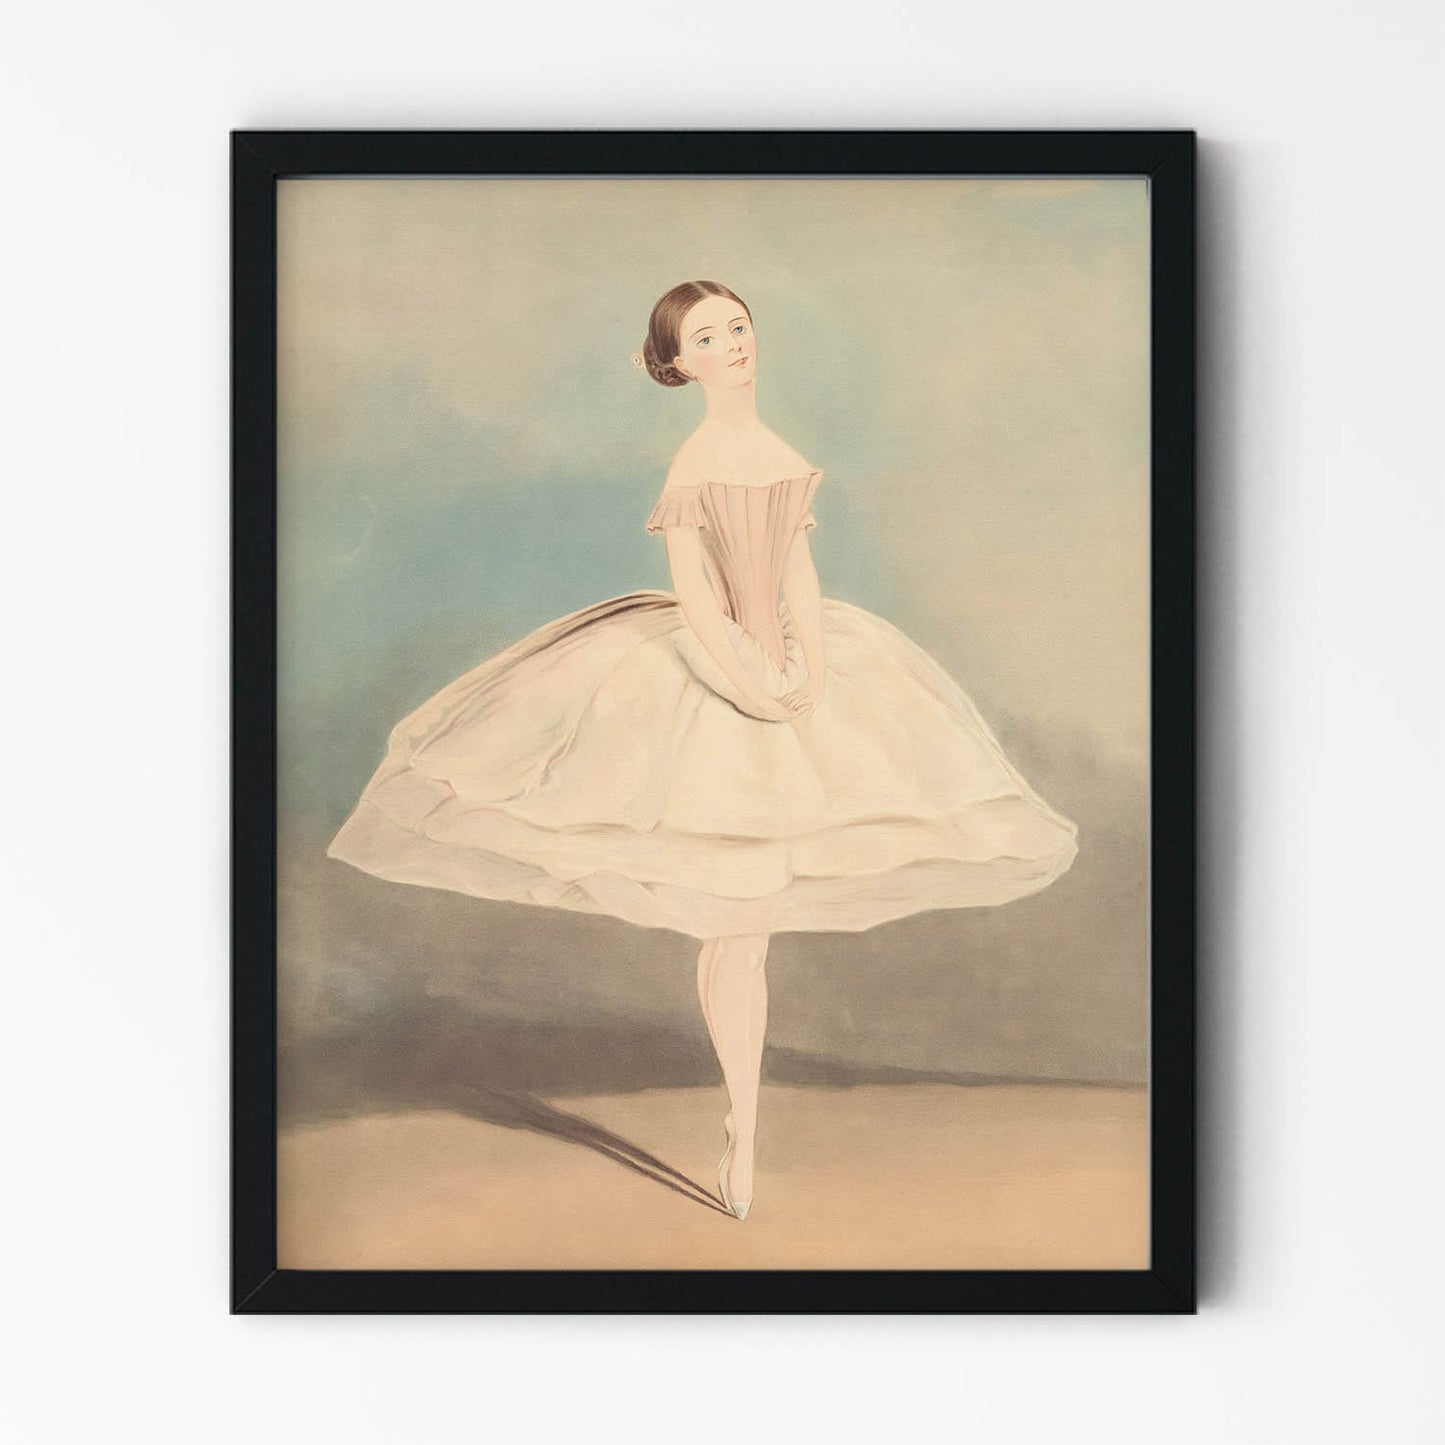 Minimalist Ballet Art Print in Black Picture Frame